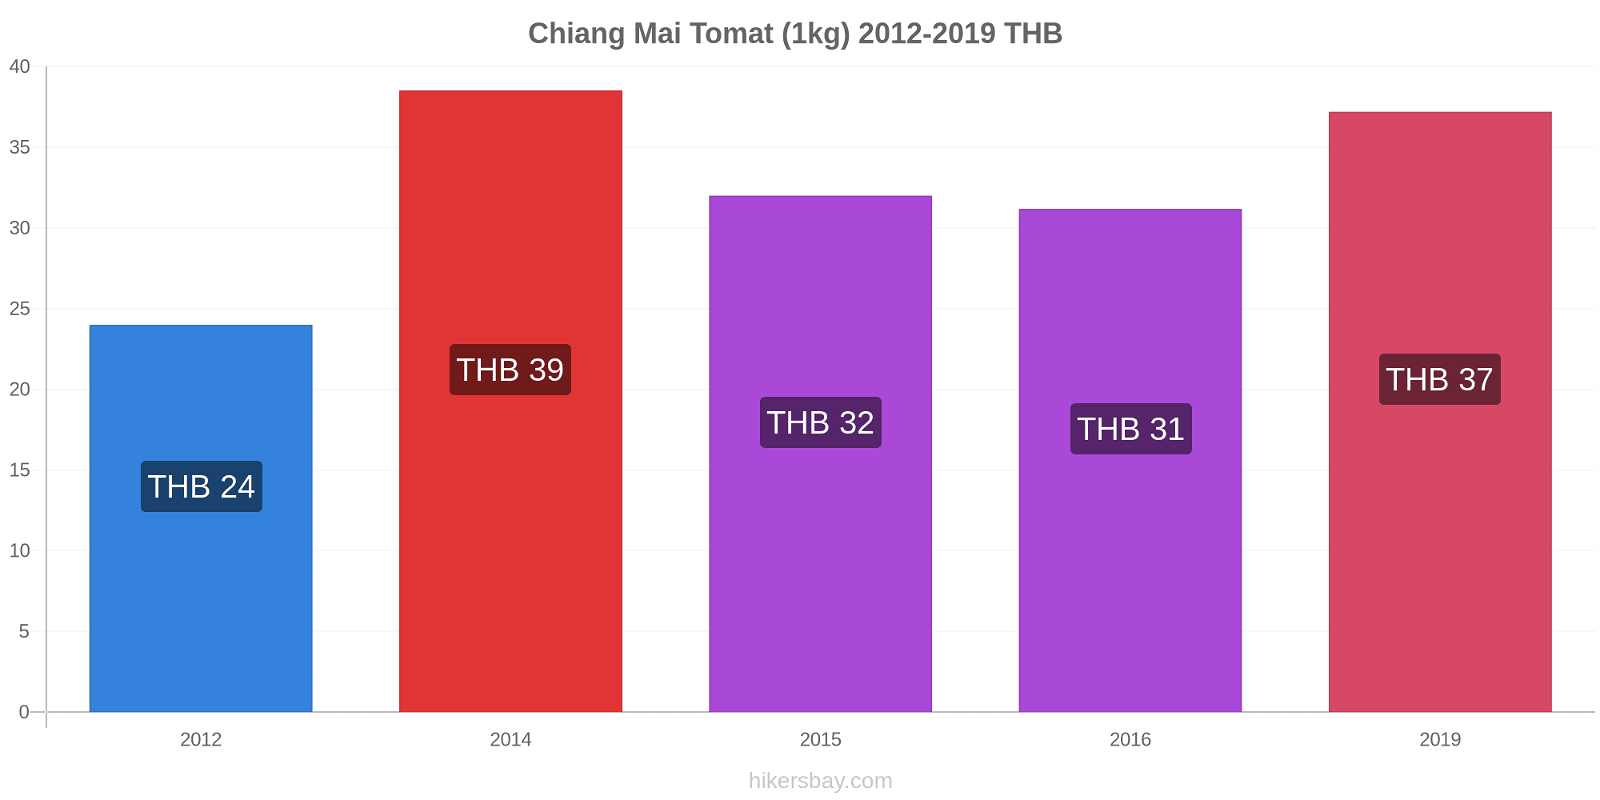 Chiang Mai perubahan harga Tomat (1kg) hikersbay.com